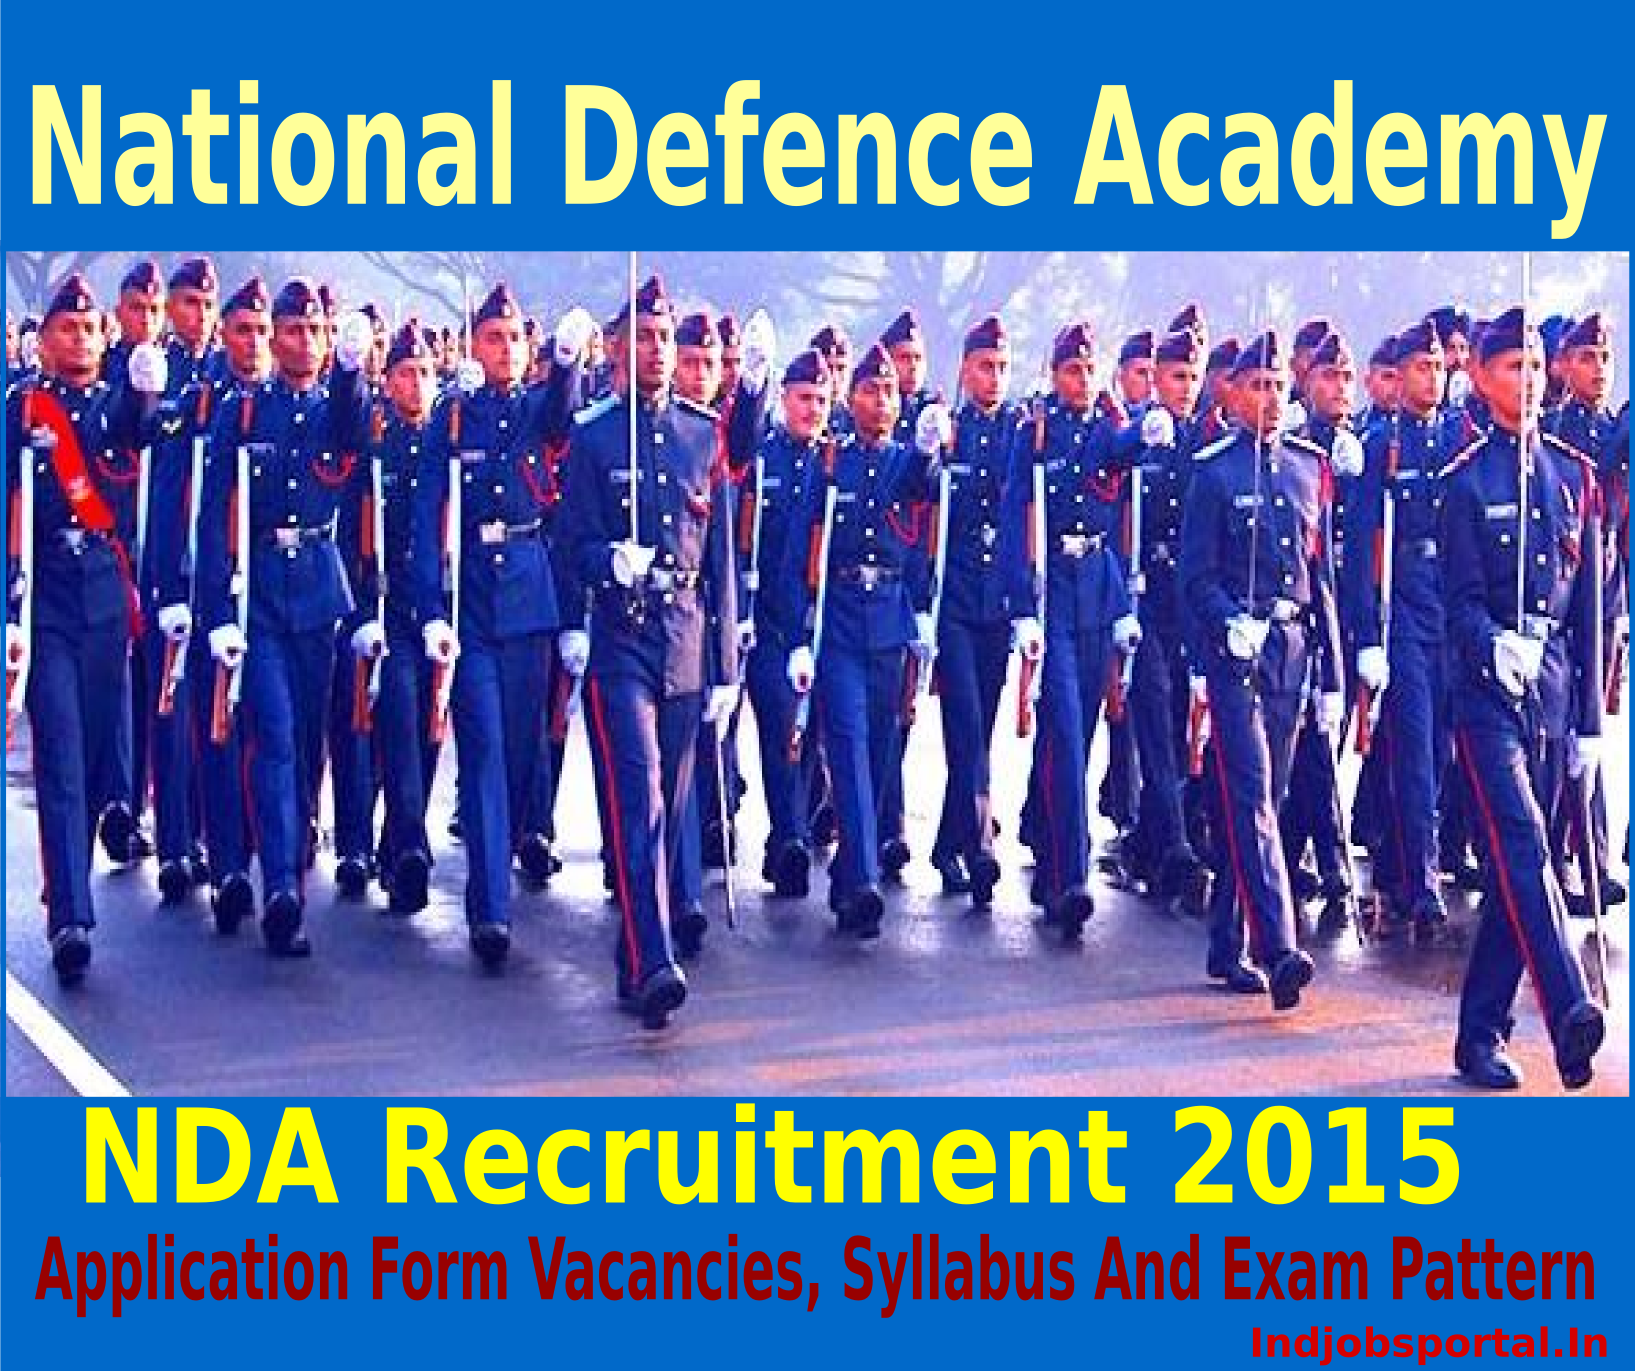 NDA Recruitment 2015: Application Form Vacancies, Syllabus And Exam Pattern